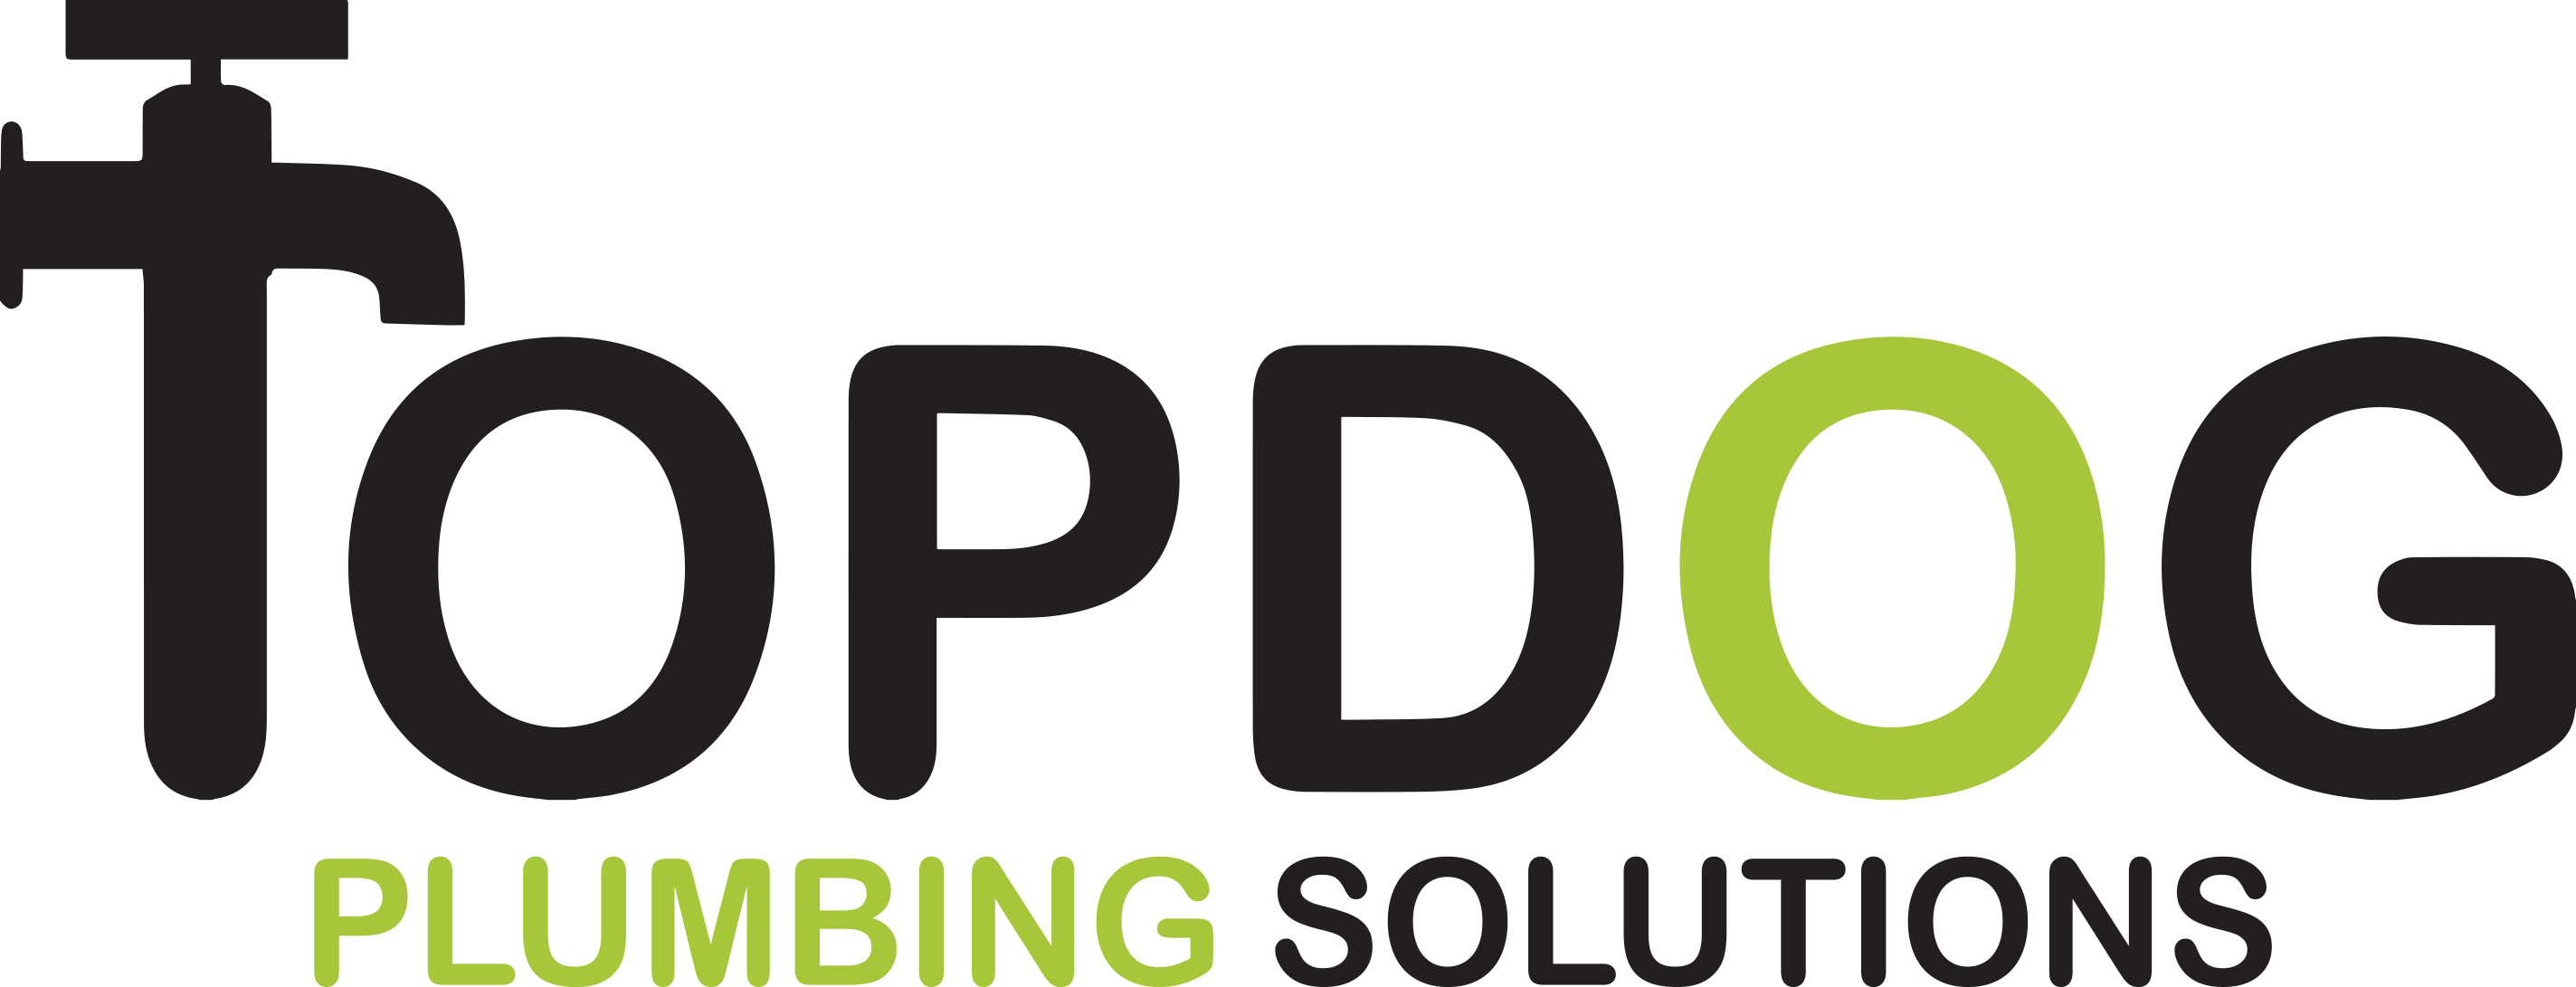 Top Dog Plumbing Solutions Logo